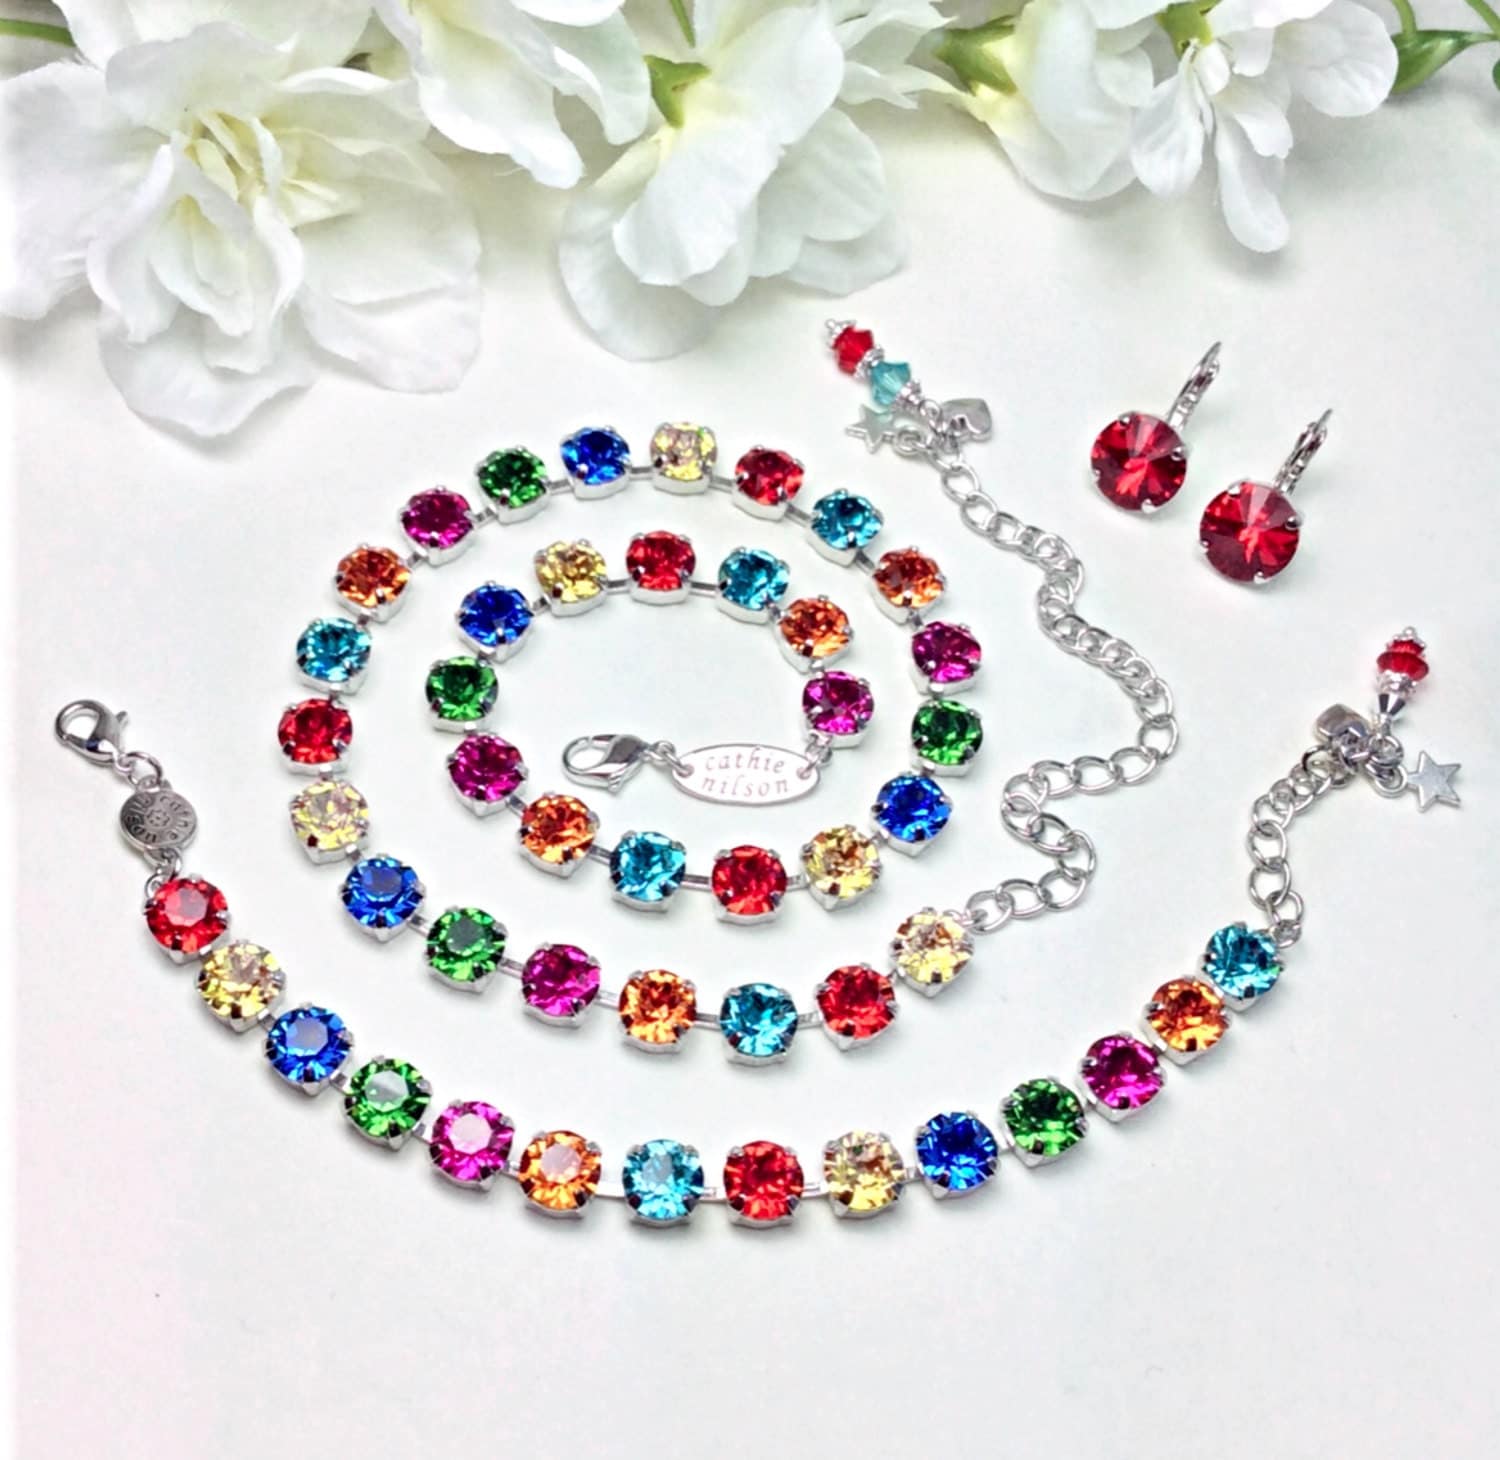 Swarovski Crystal 8.5mm Necklace, Bracelet & Earrings - Designer Inspired  - " Joy" - Happy Rainbow Colors  - FREE SHIPPING